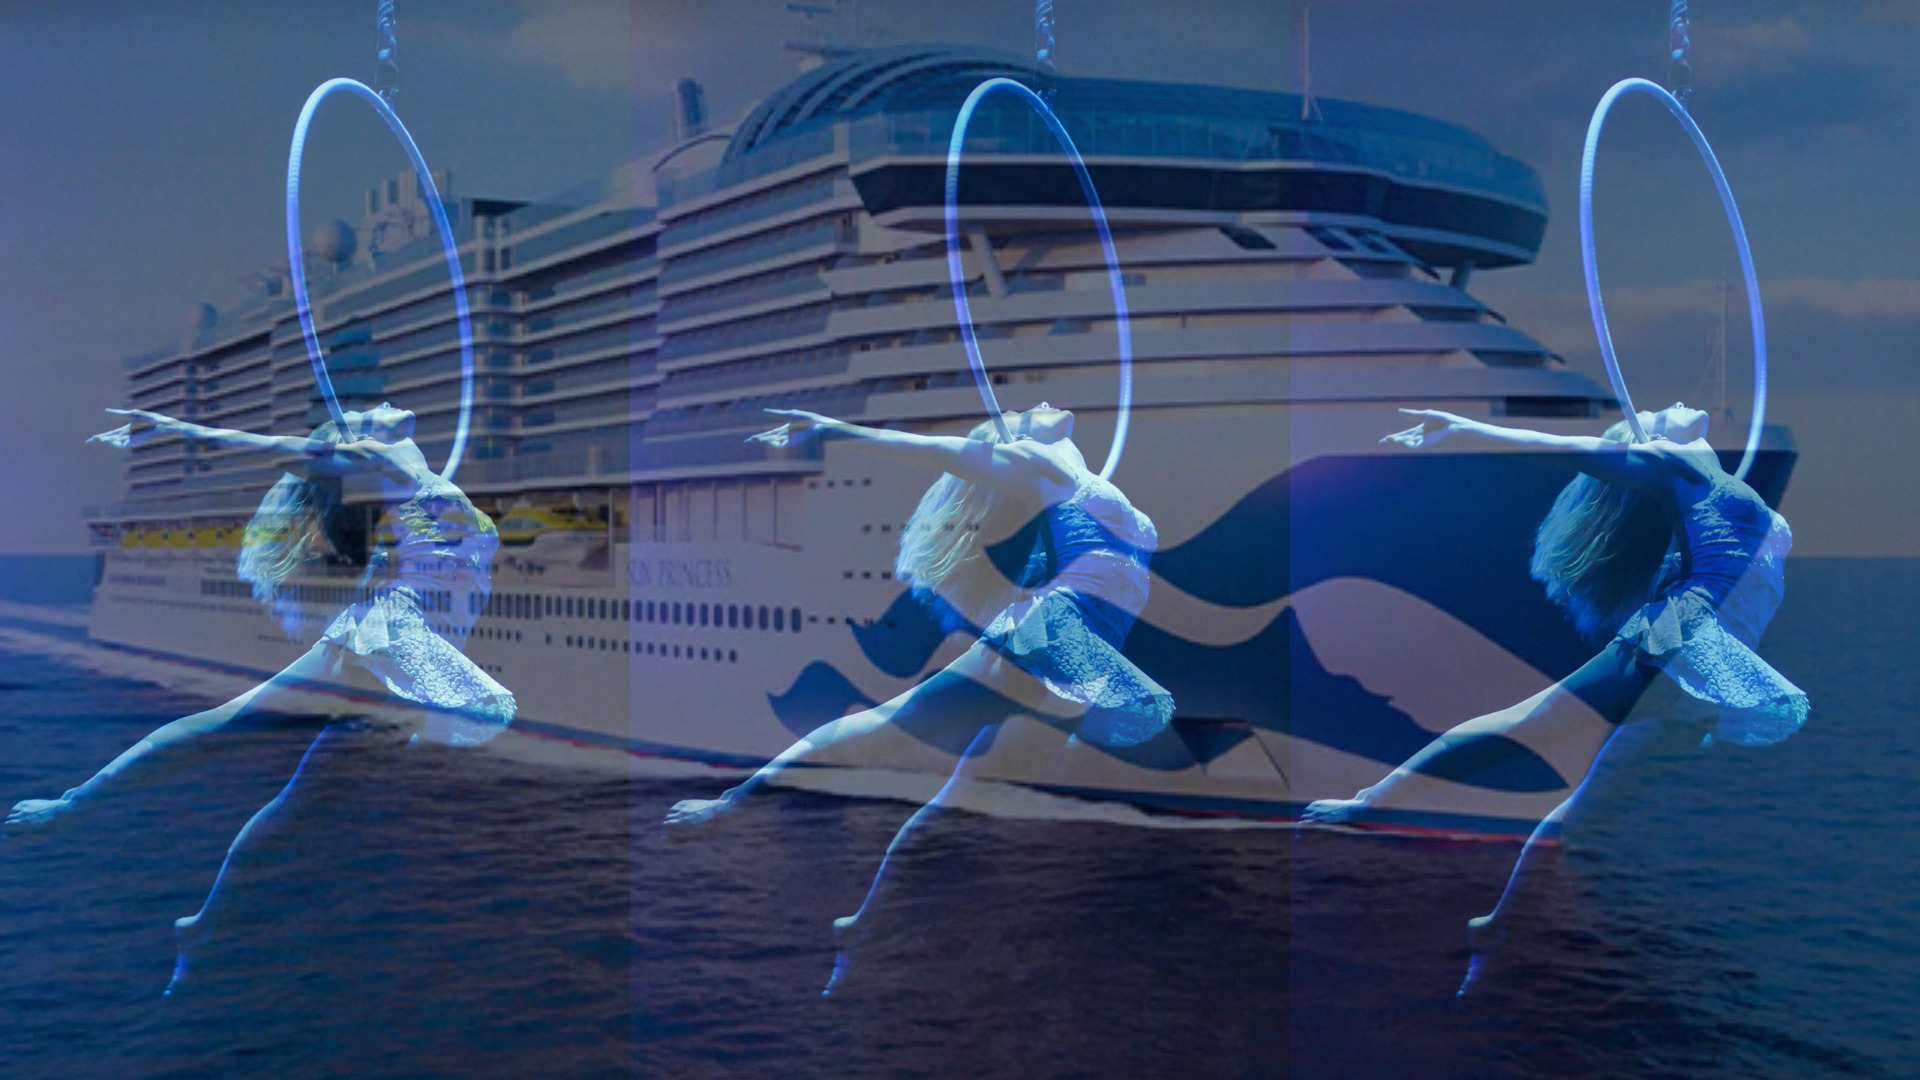 Mesmerizing Cirque Éloize Performances to Headline Entertainment Aboard New Sun Princess Cruise Ship